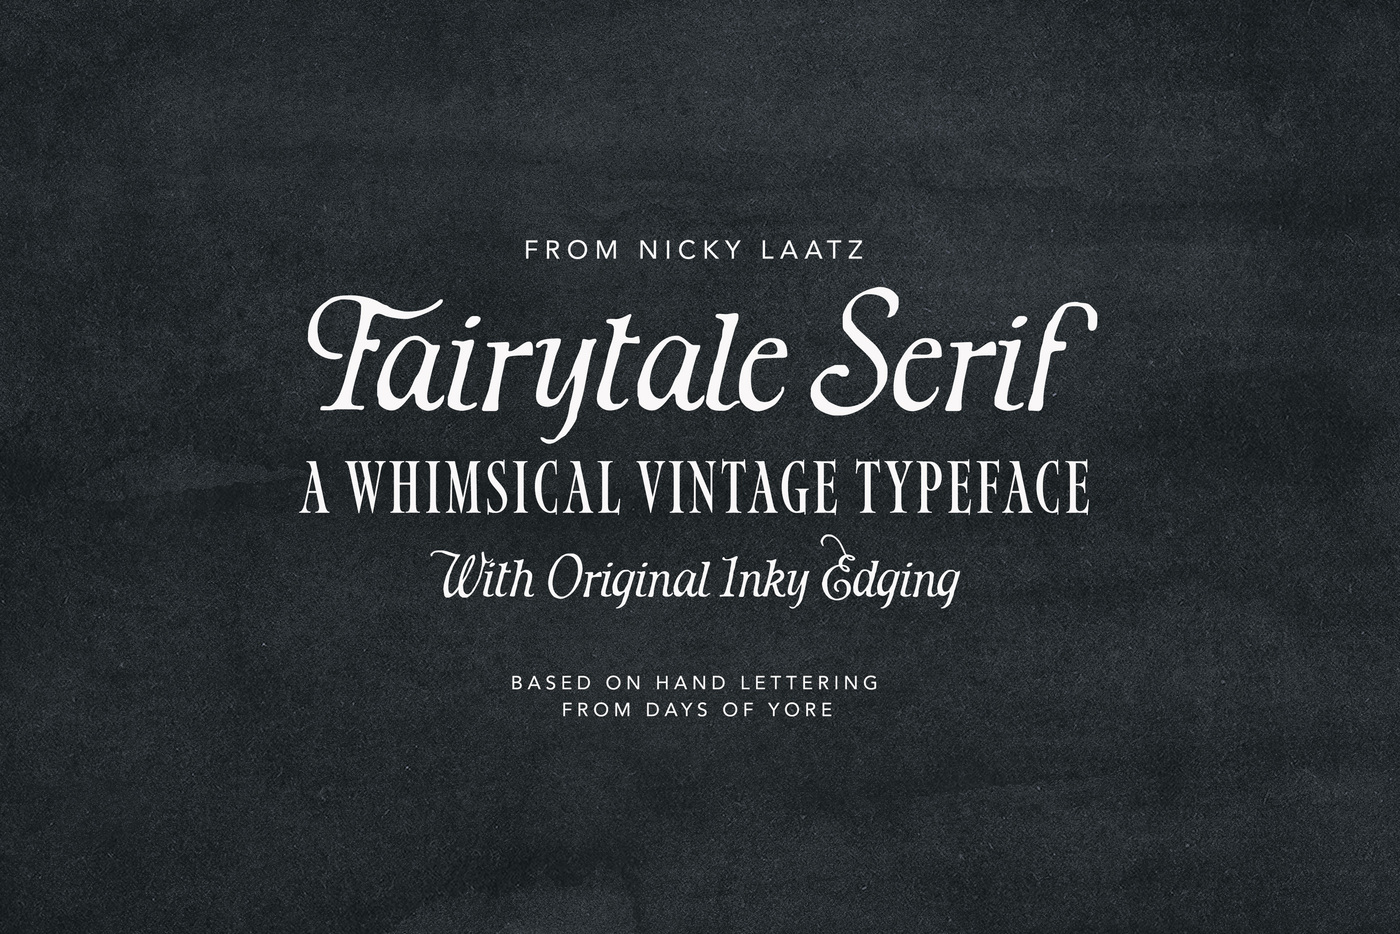 Fairytale Serif  main product image by Nicky Laatz